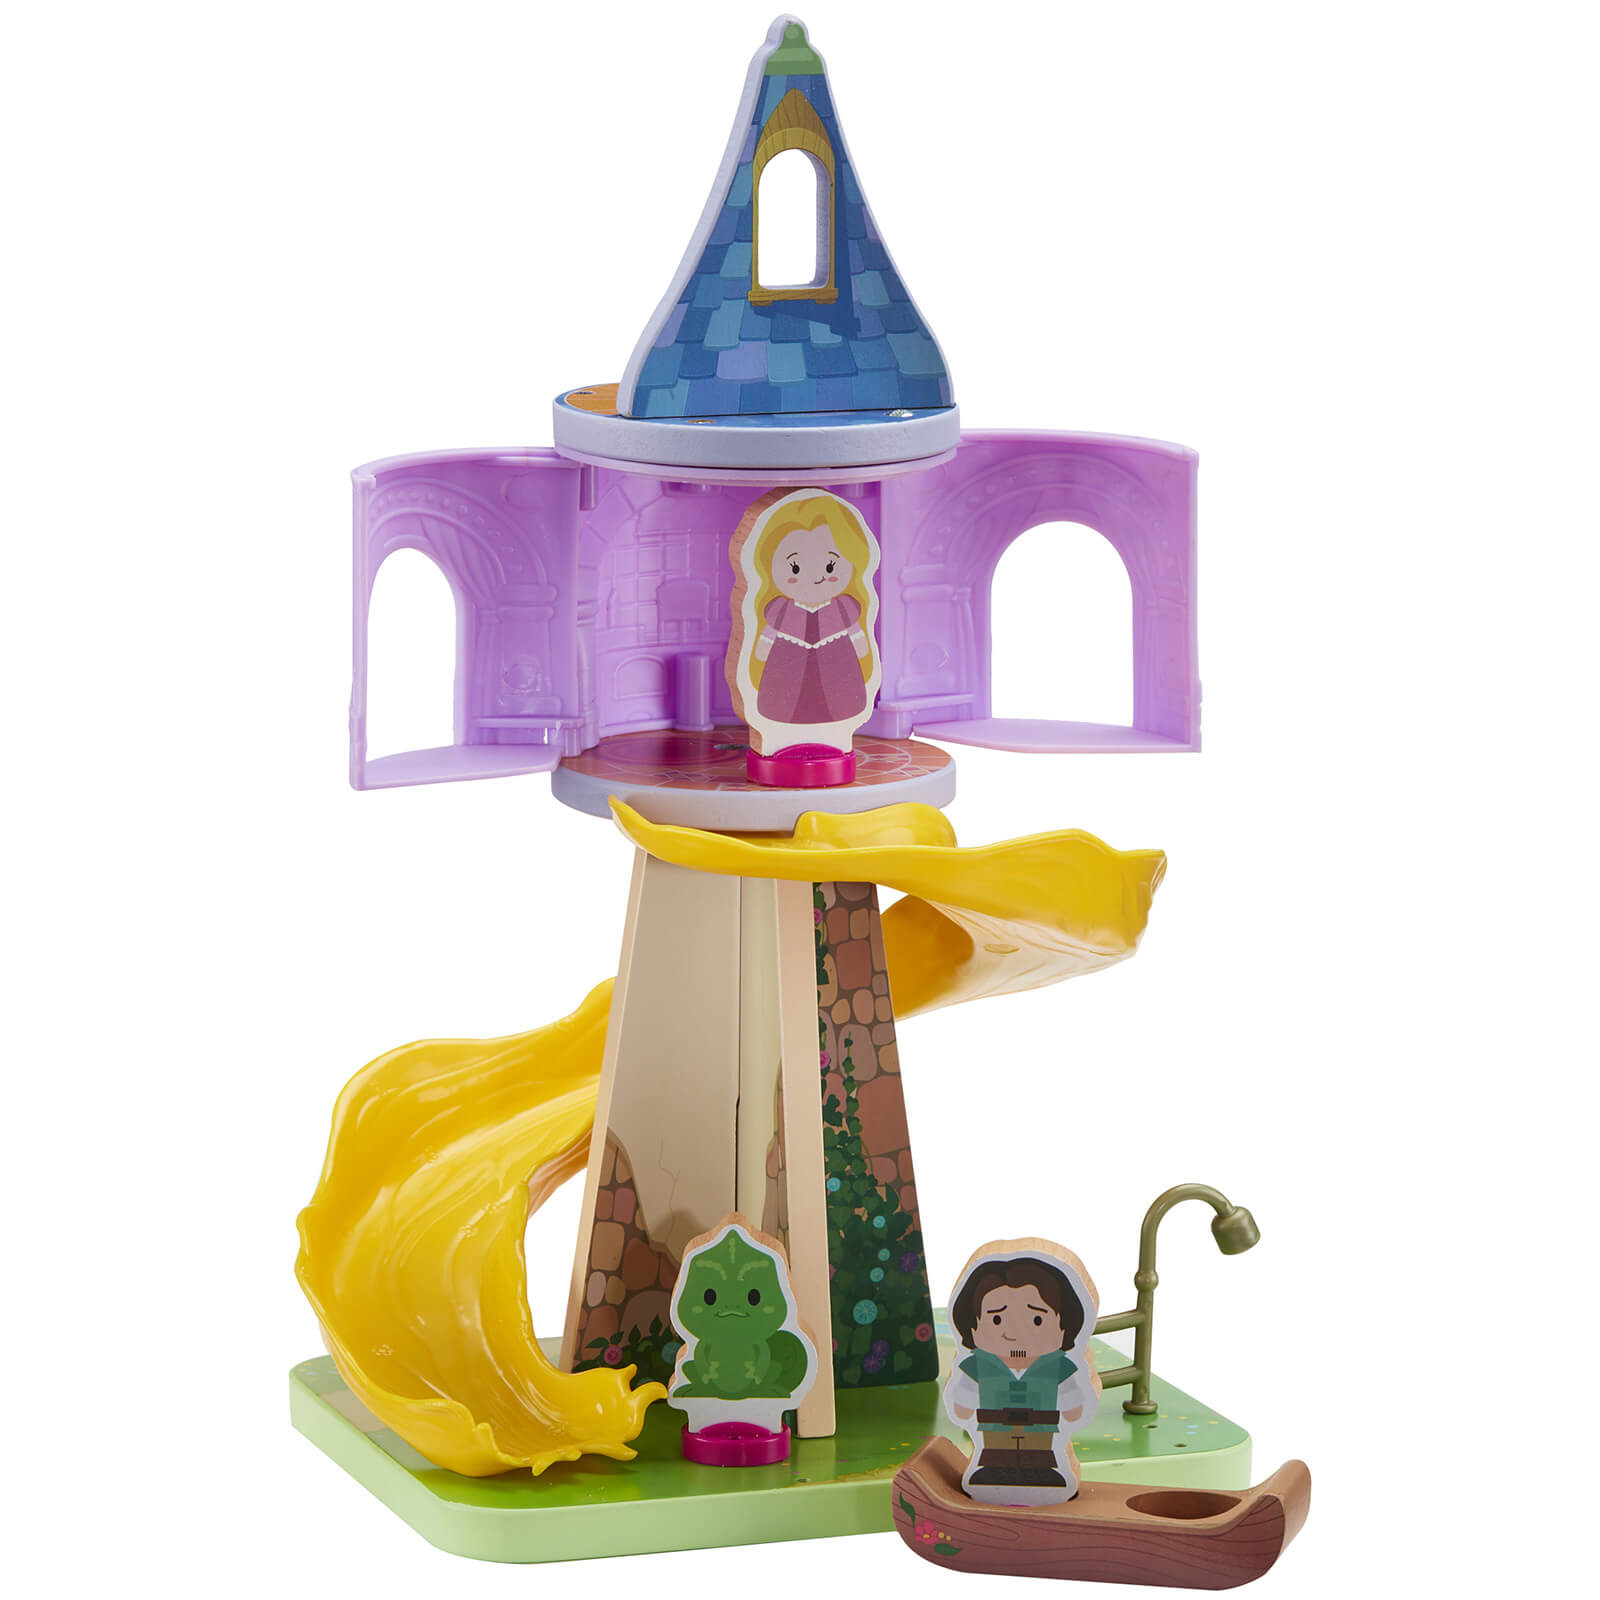 Disney Princess - Wooden Rapunzel's Tower and Figure Playset